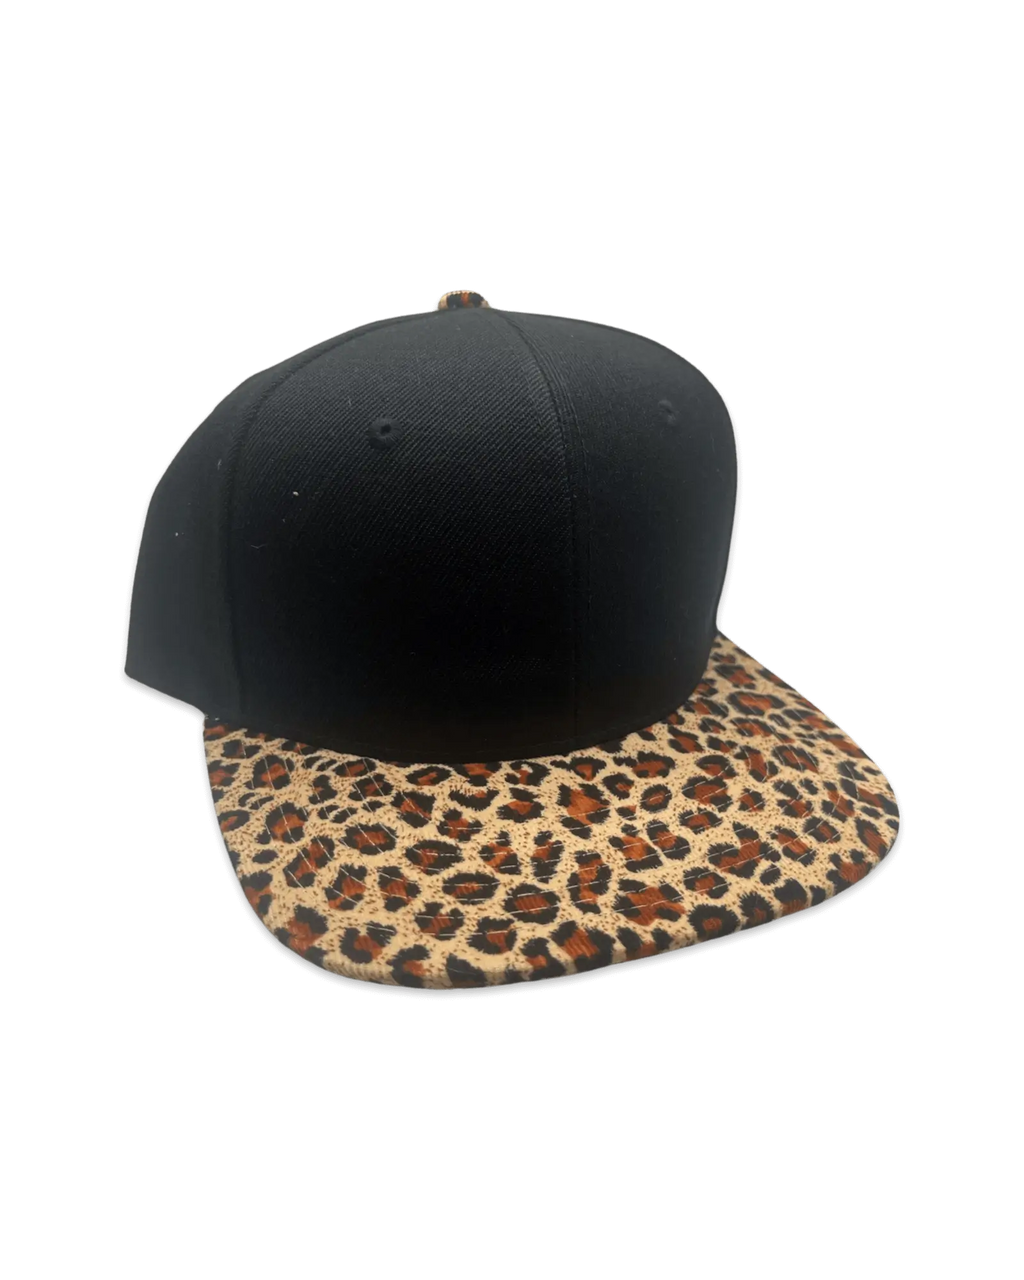 Cheetah print SnapBack hat ☆